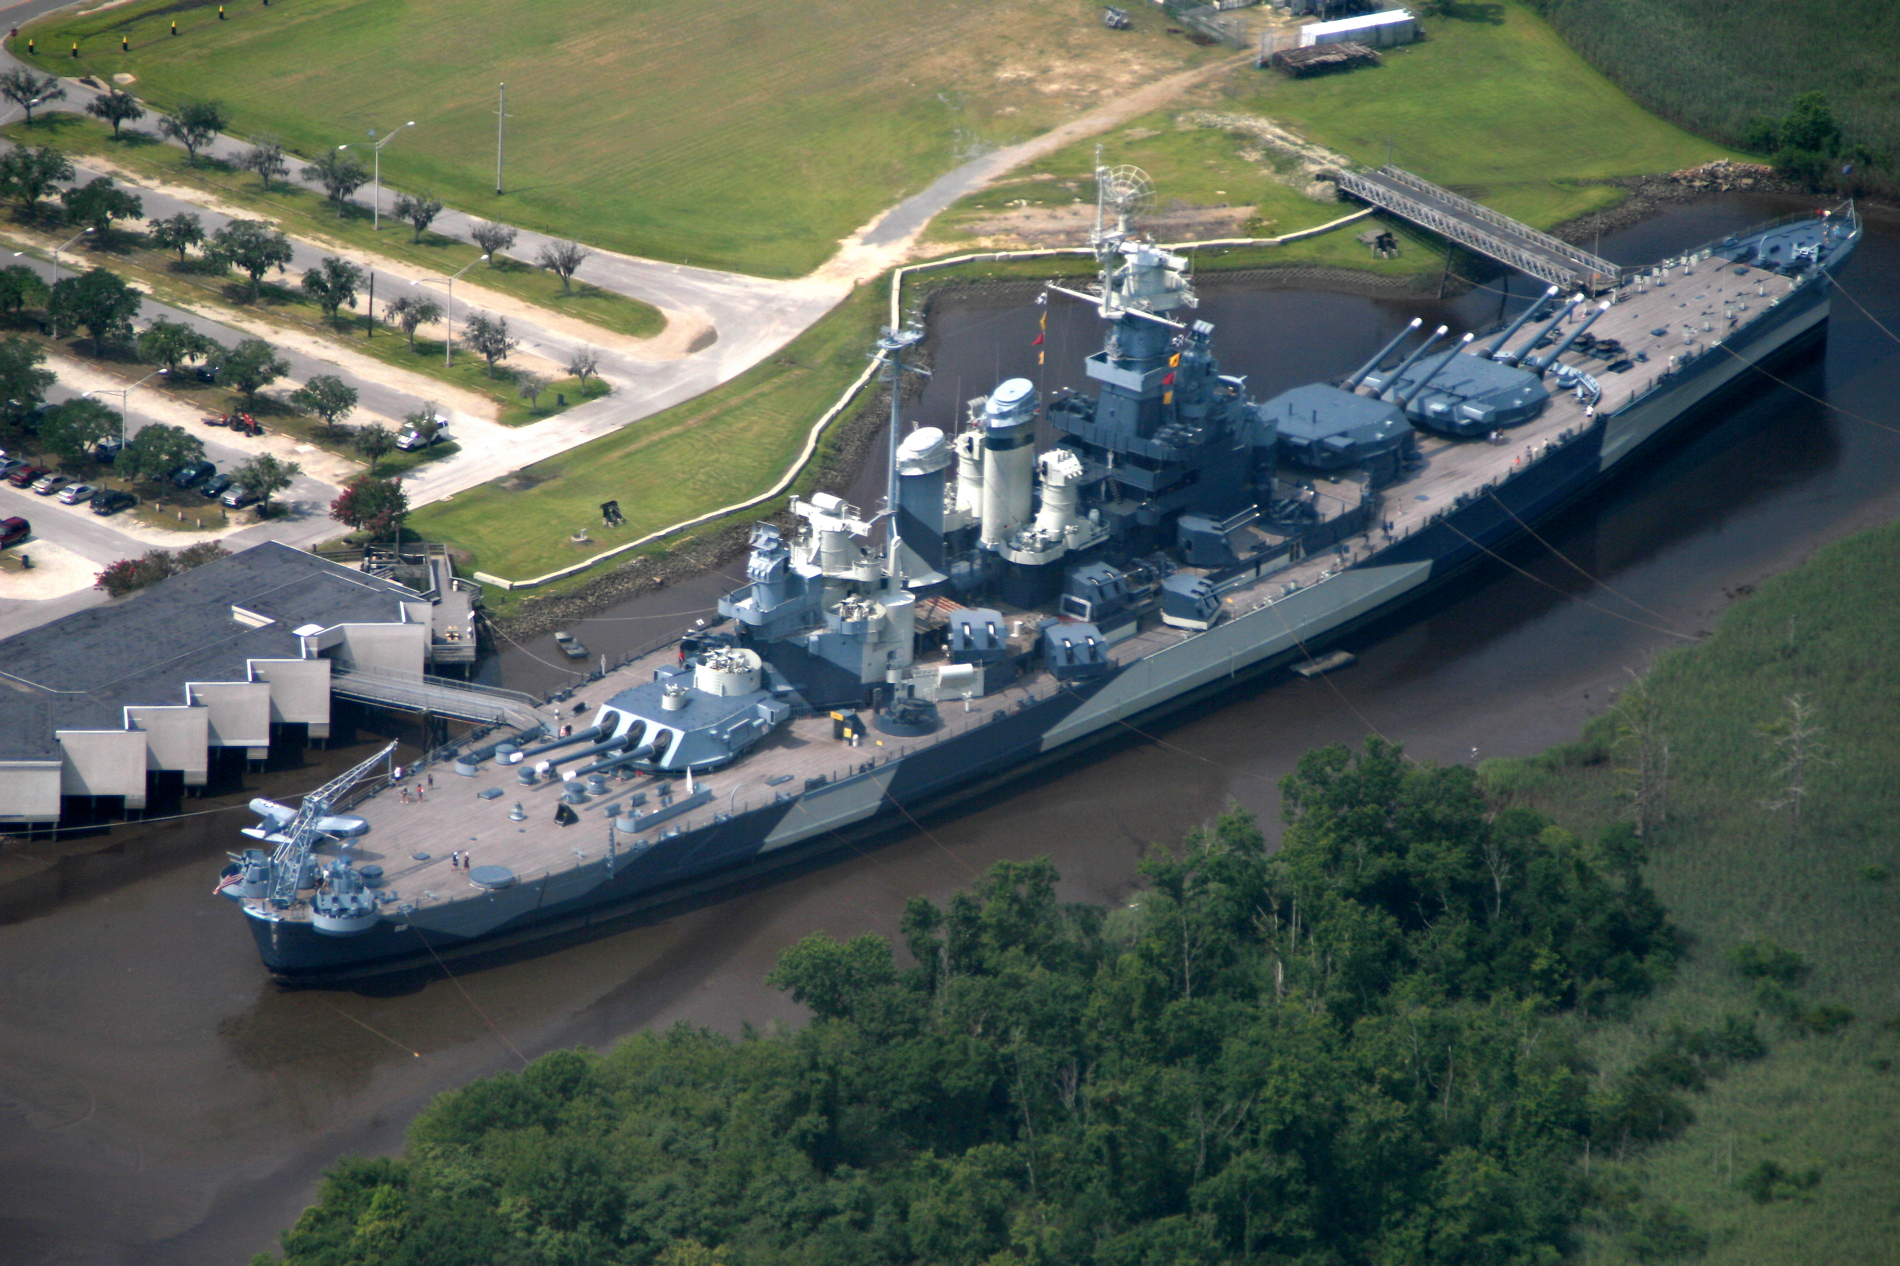 Aerial view of museum ship North Carolina, Wilmington, North Carolina, United States, 20 Jul 2006